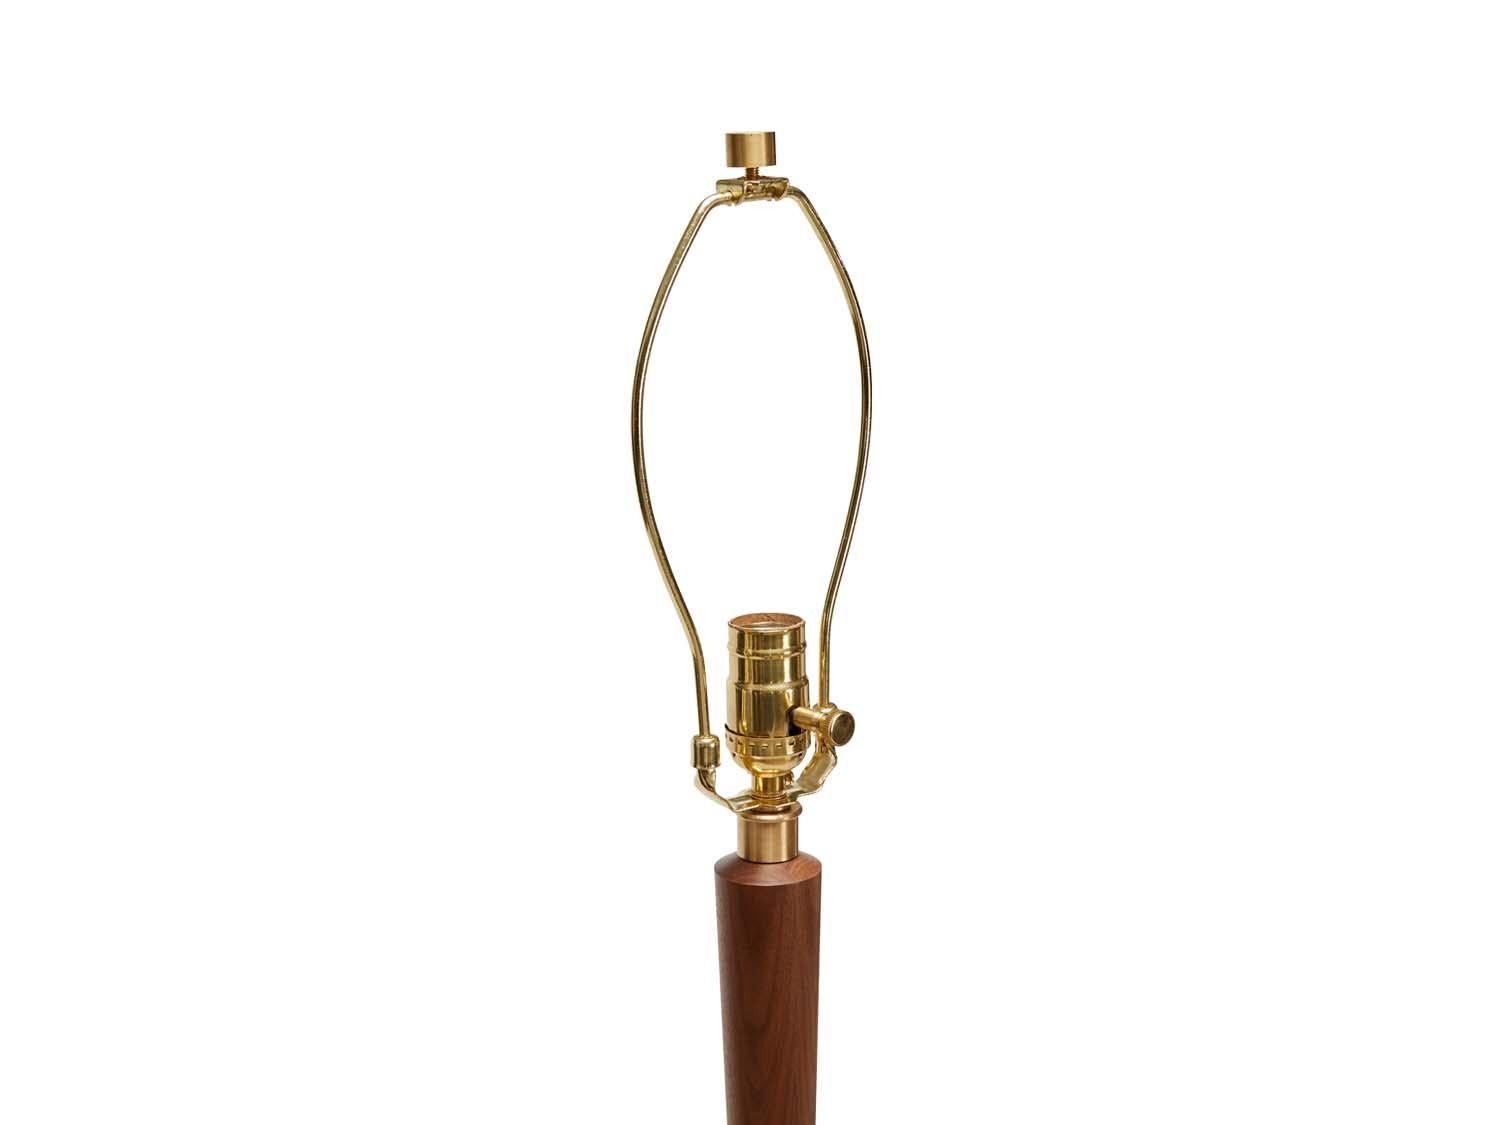 American El Monte Lamp by Lawson-Fenning For Sale